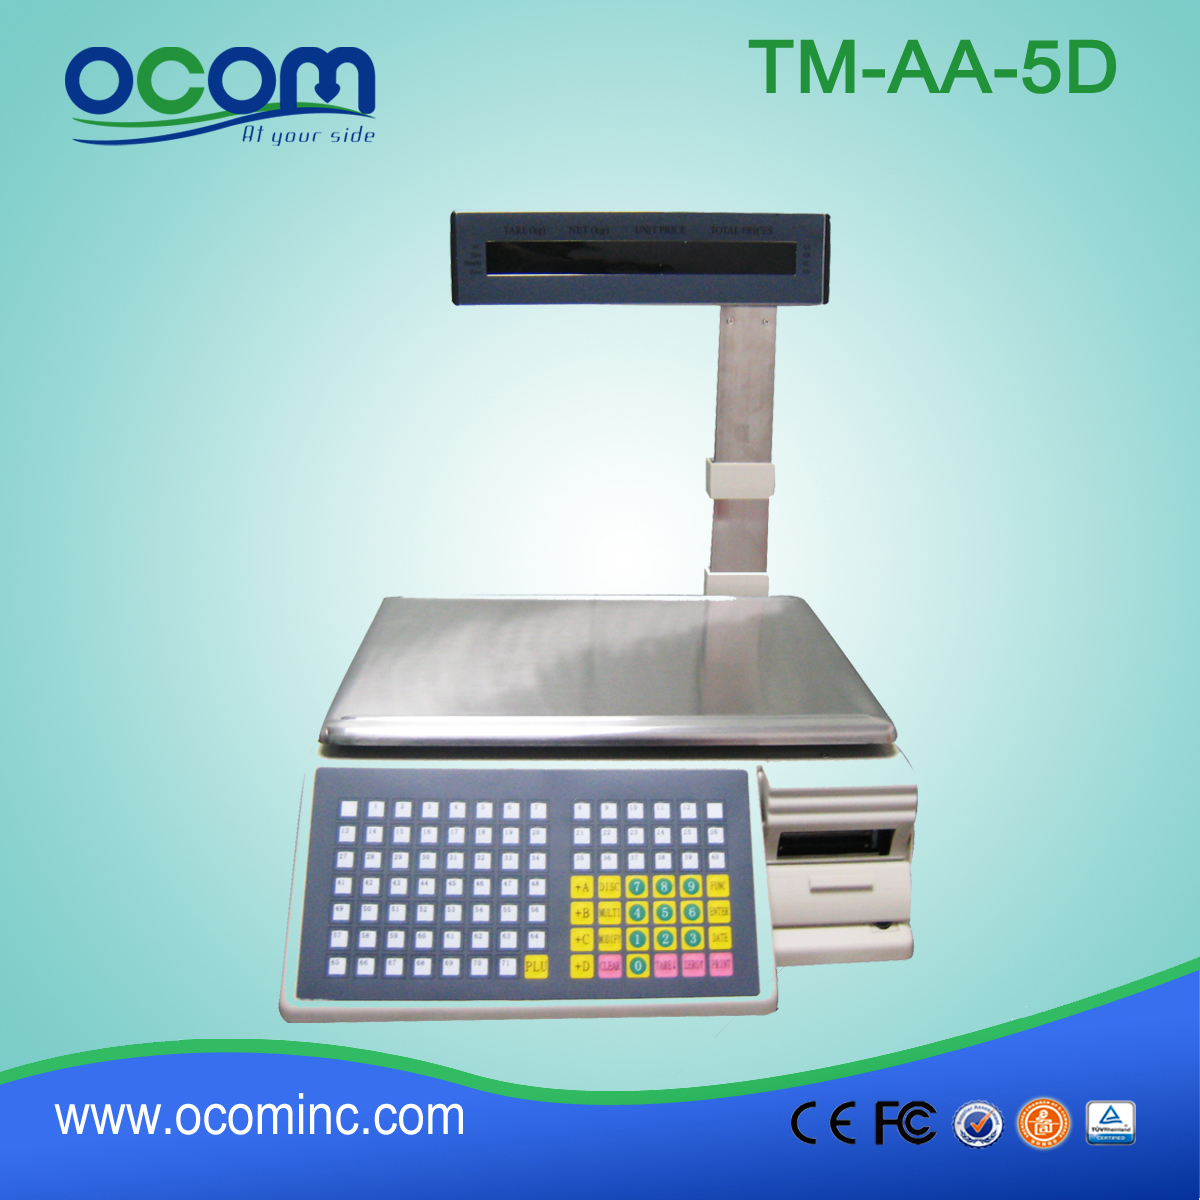 TM-AA-5D التجزئة الموازين الطباعة تسمية الباركود مقياس الأسعار